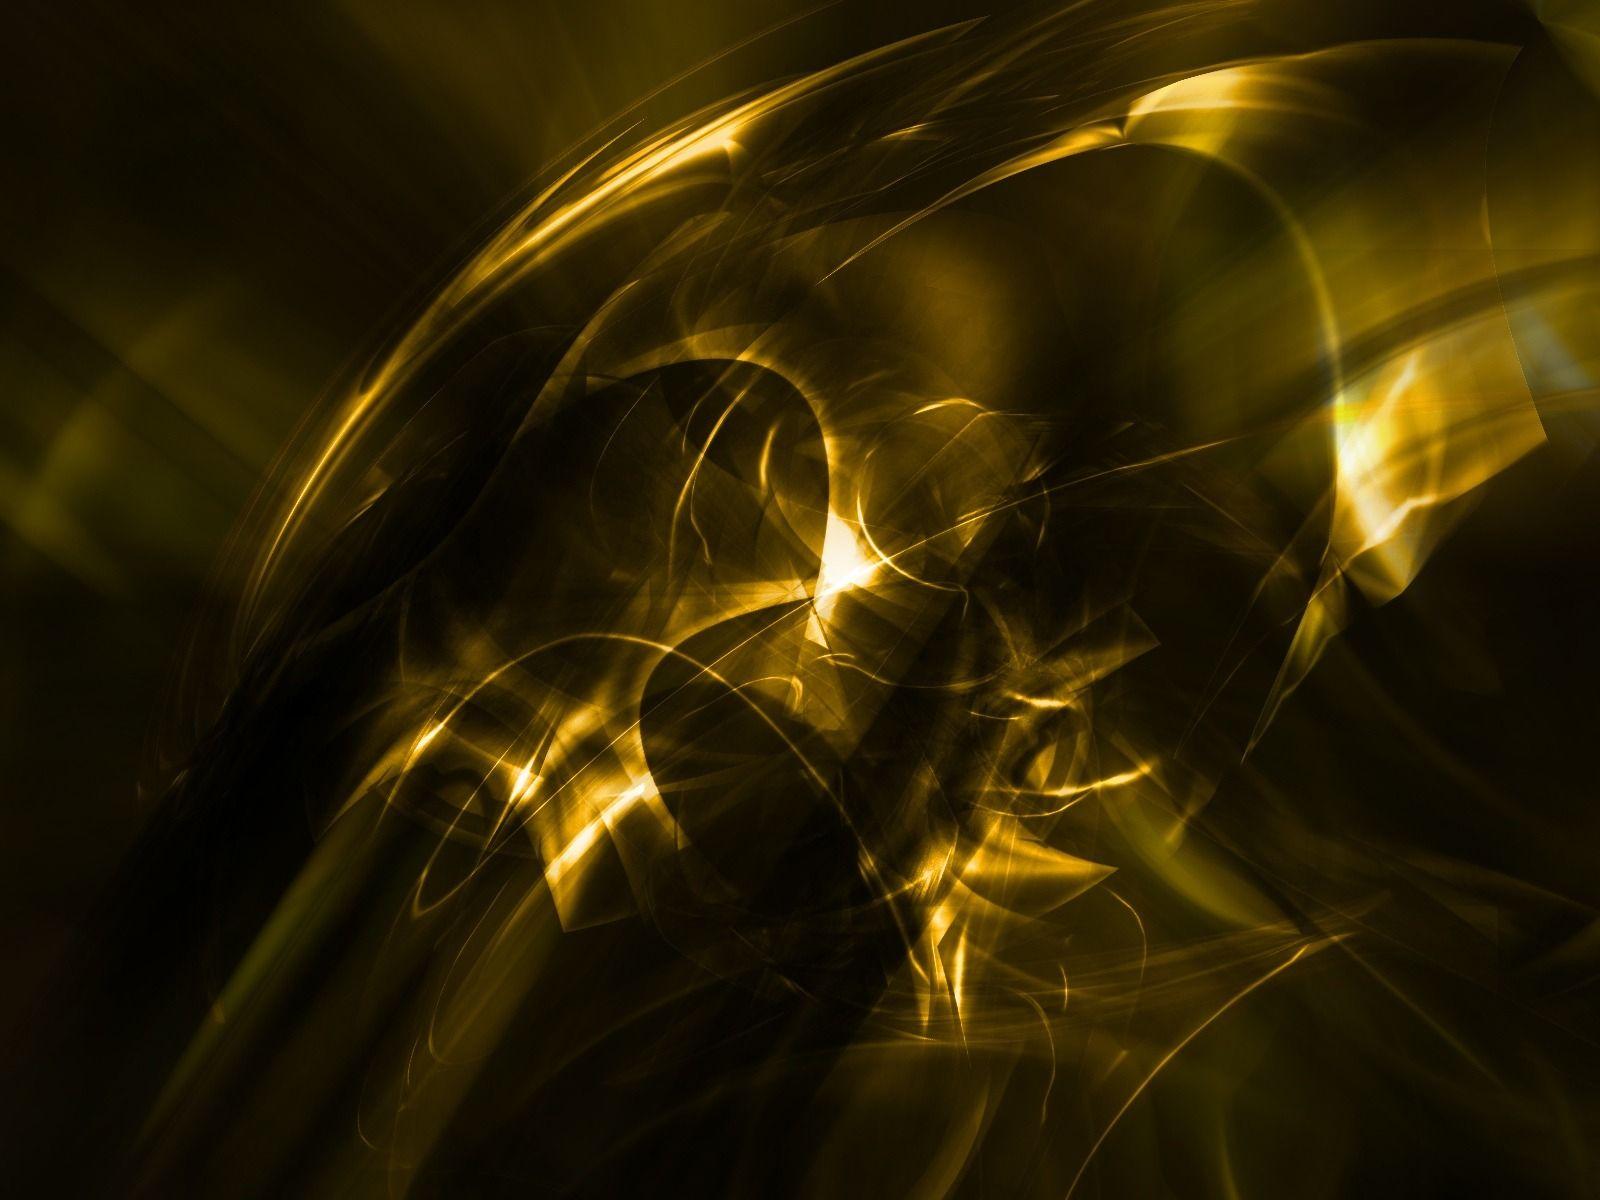 Gold Vortex Wallpaper Abstract 3D Wallpaper in jpg format for free